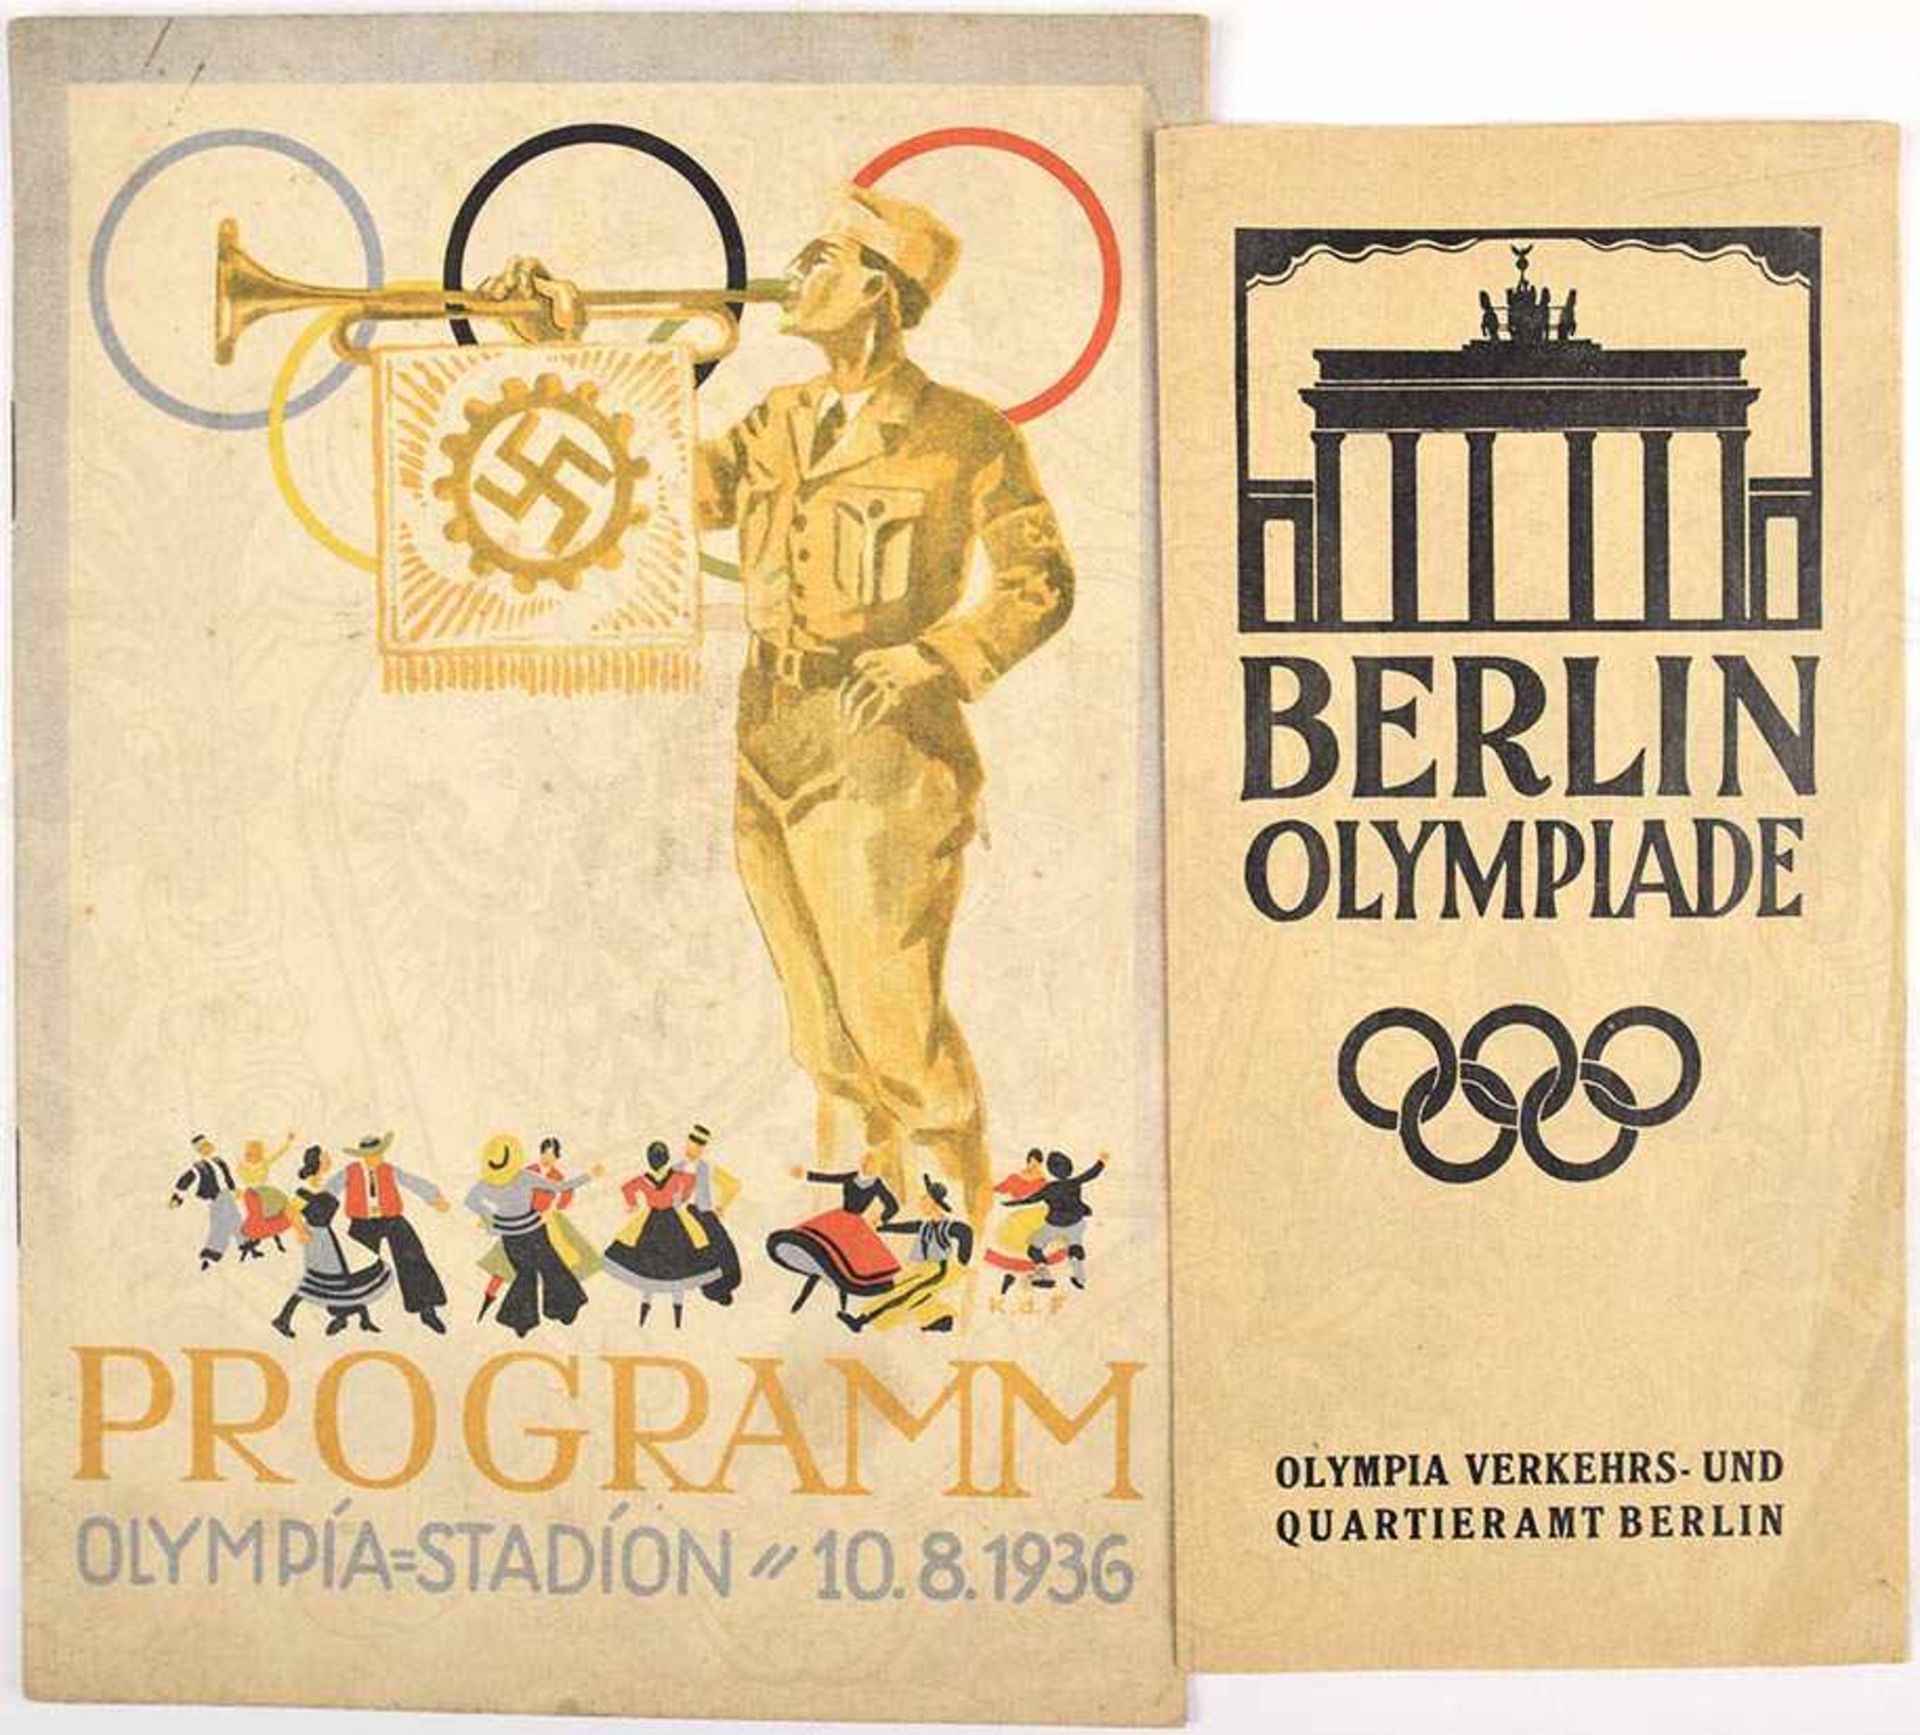 PROGRAMM OLYMPIA-STADION 10. 8. 1936, 16 S., mehrsprachig, Karton m. farb. Titelbild, Umschlag